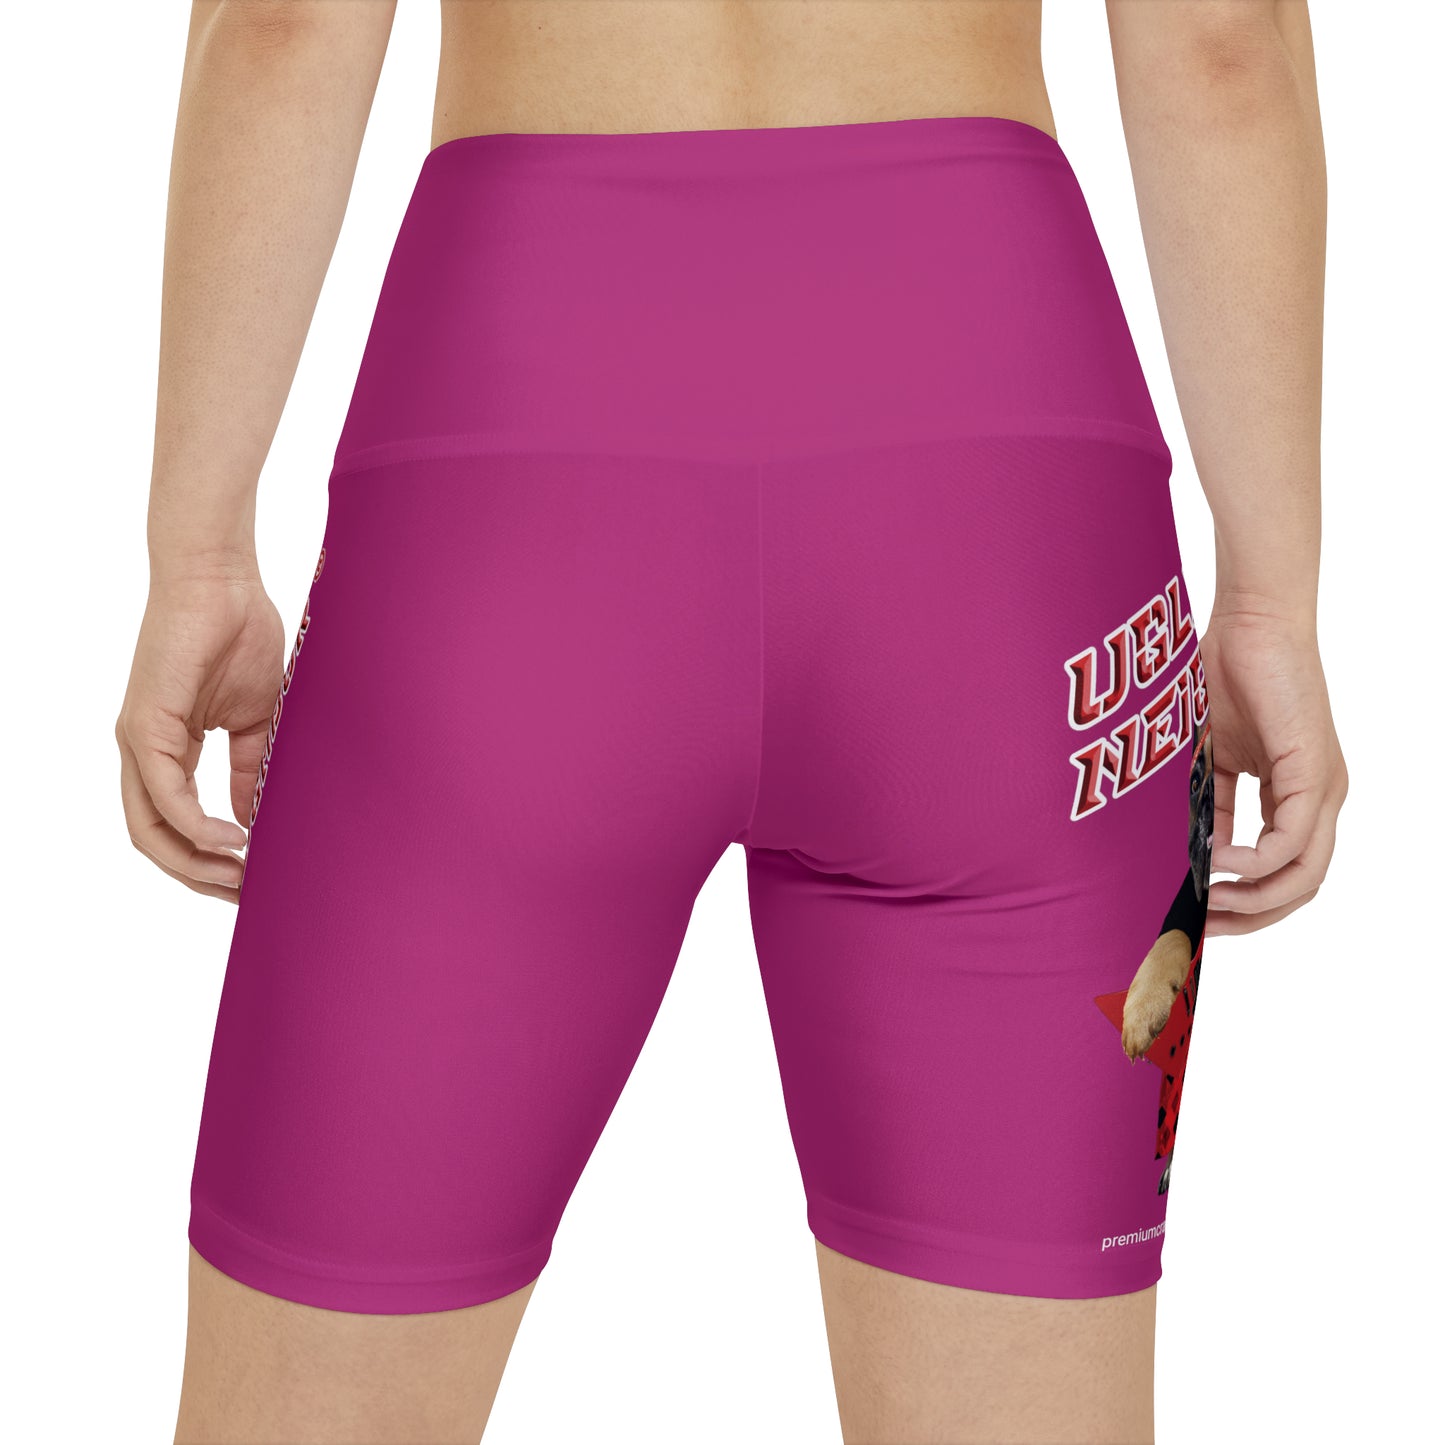 Ugly Neighbor II Women's Workout Shorts - Pink